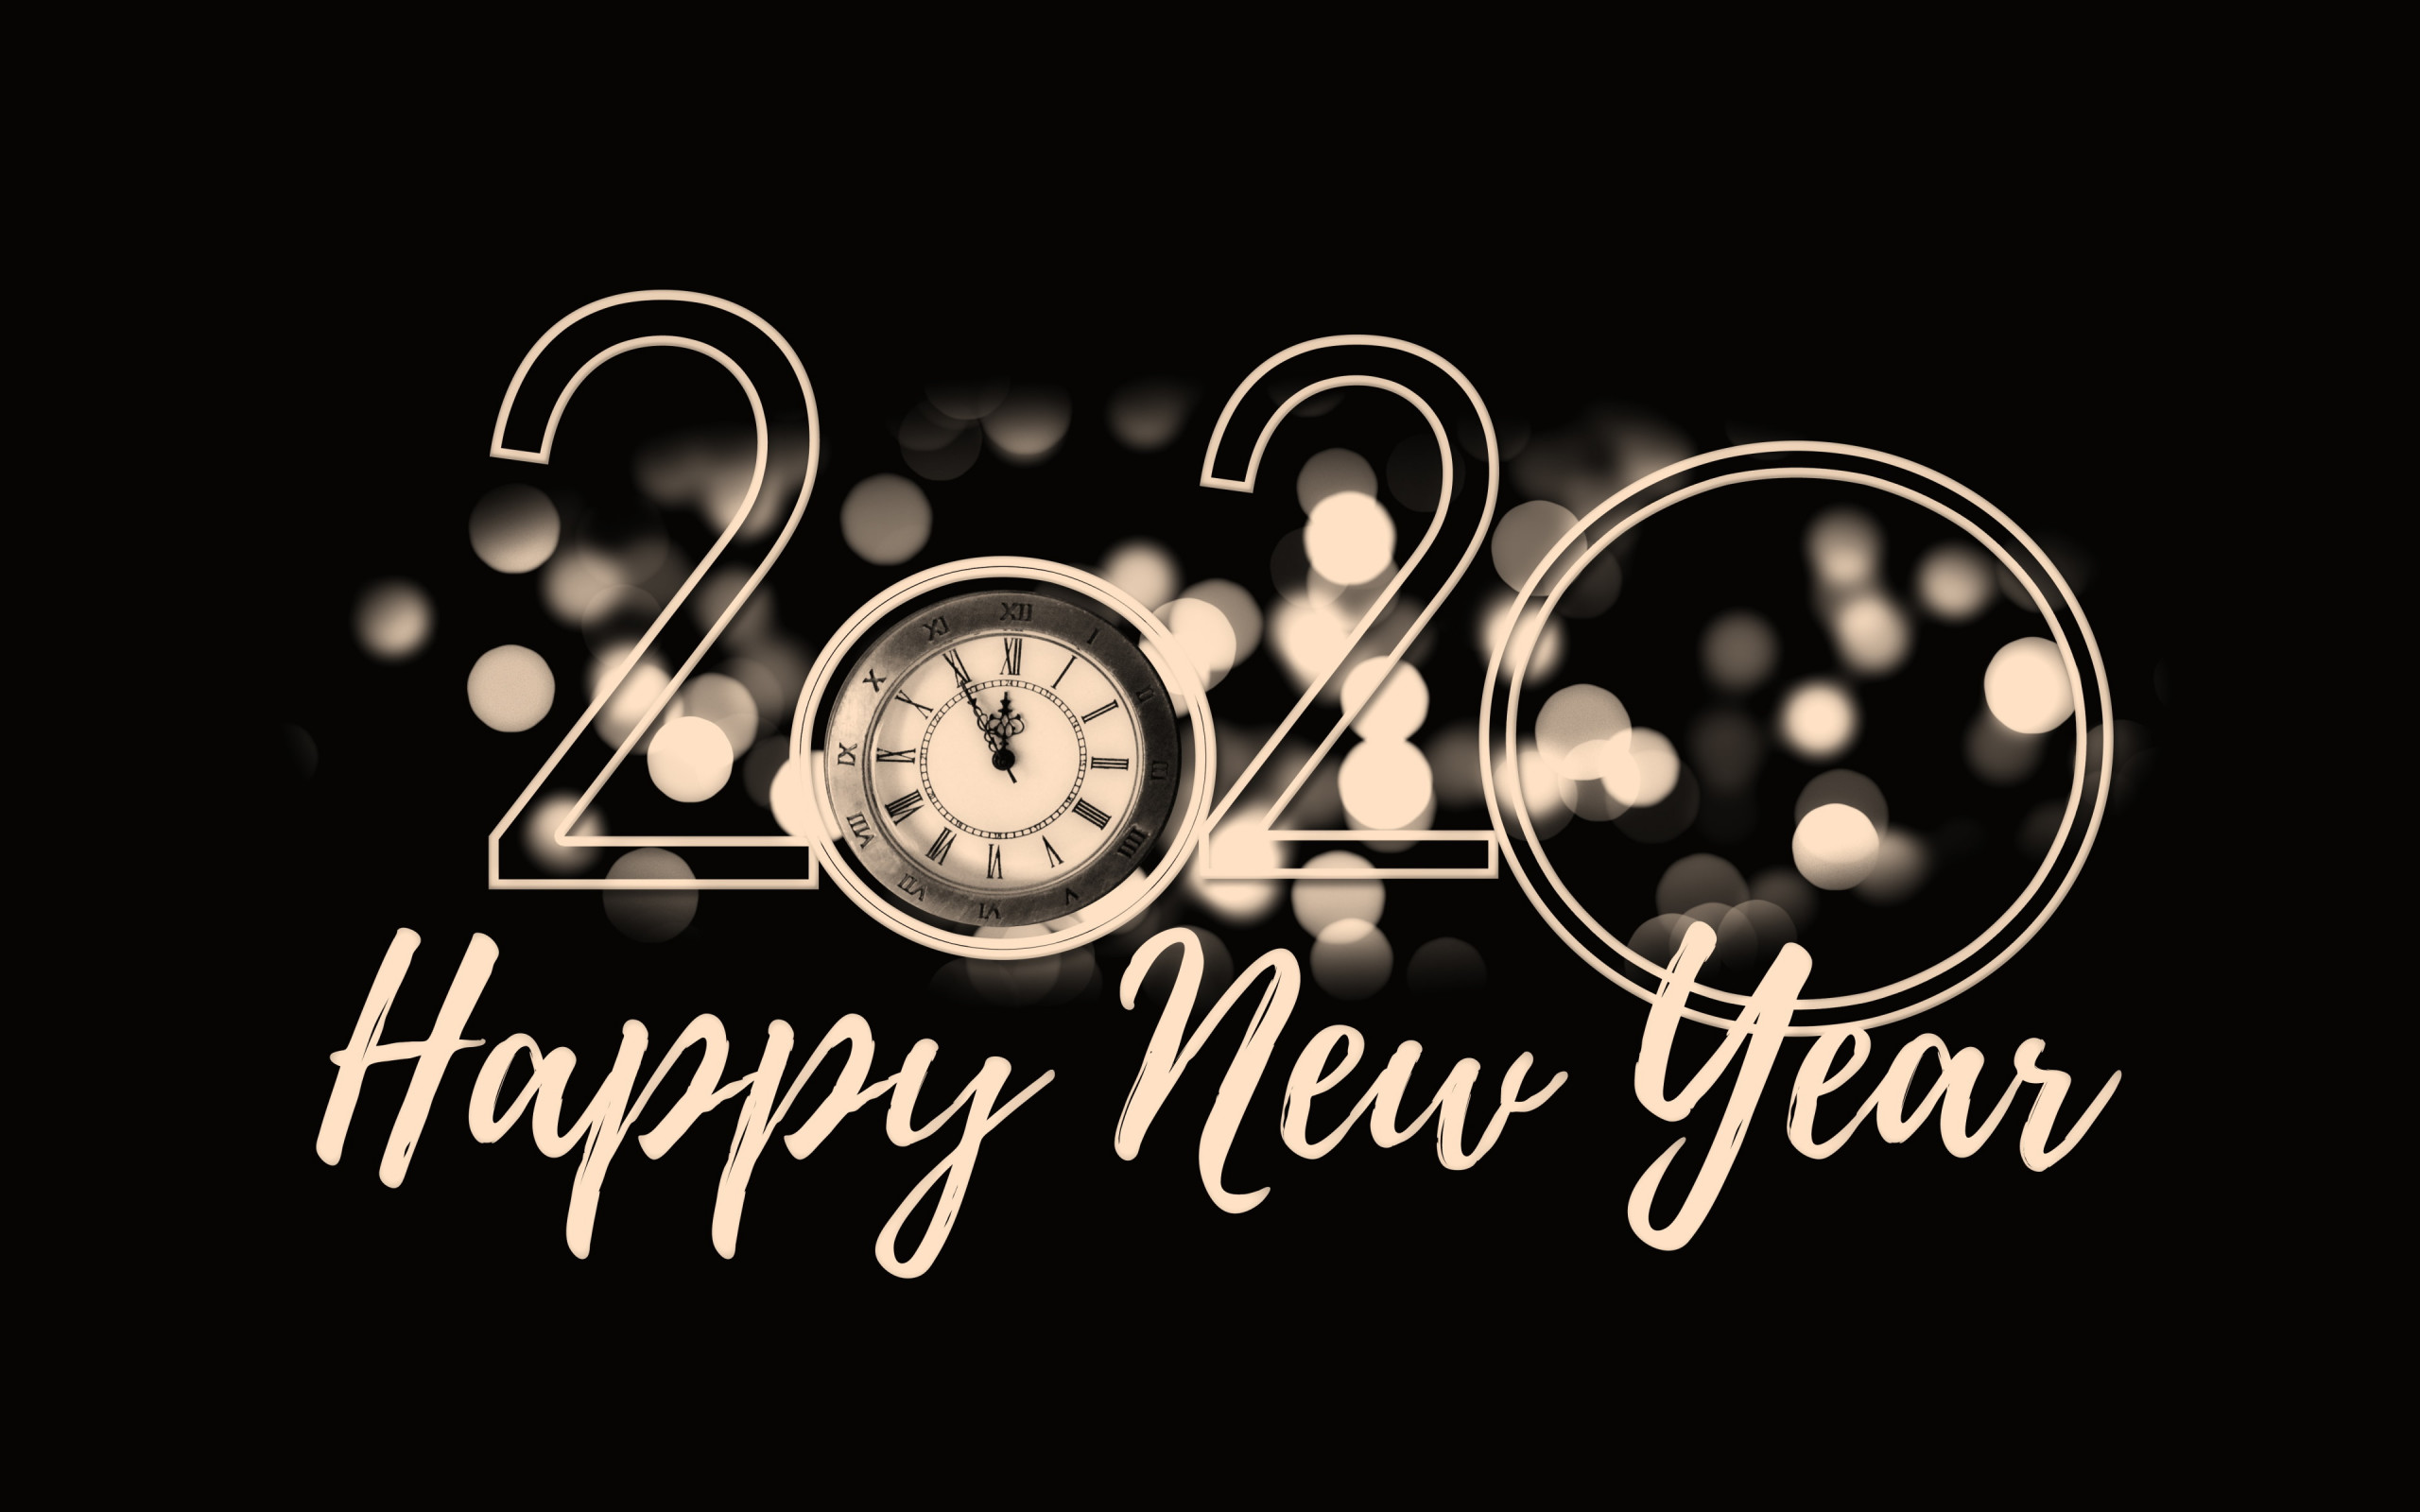 2020 Happy New Year wallpaper 2560x1600